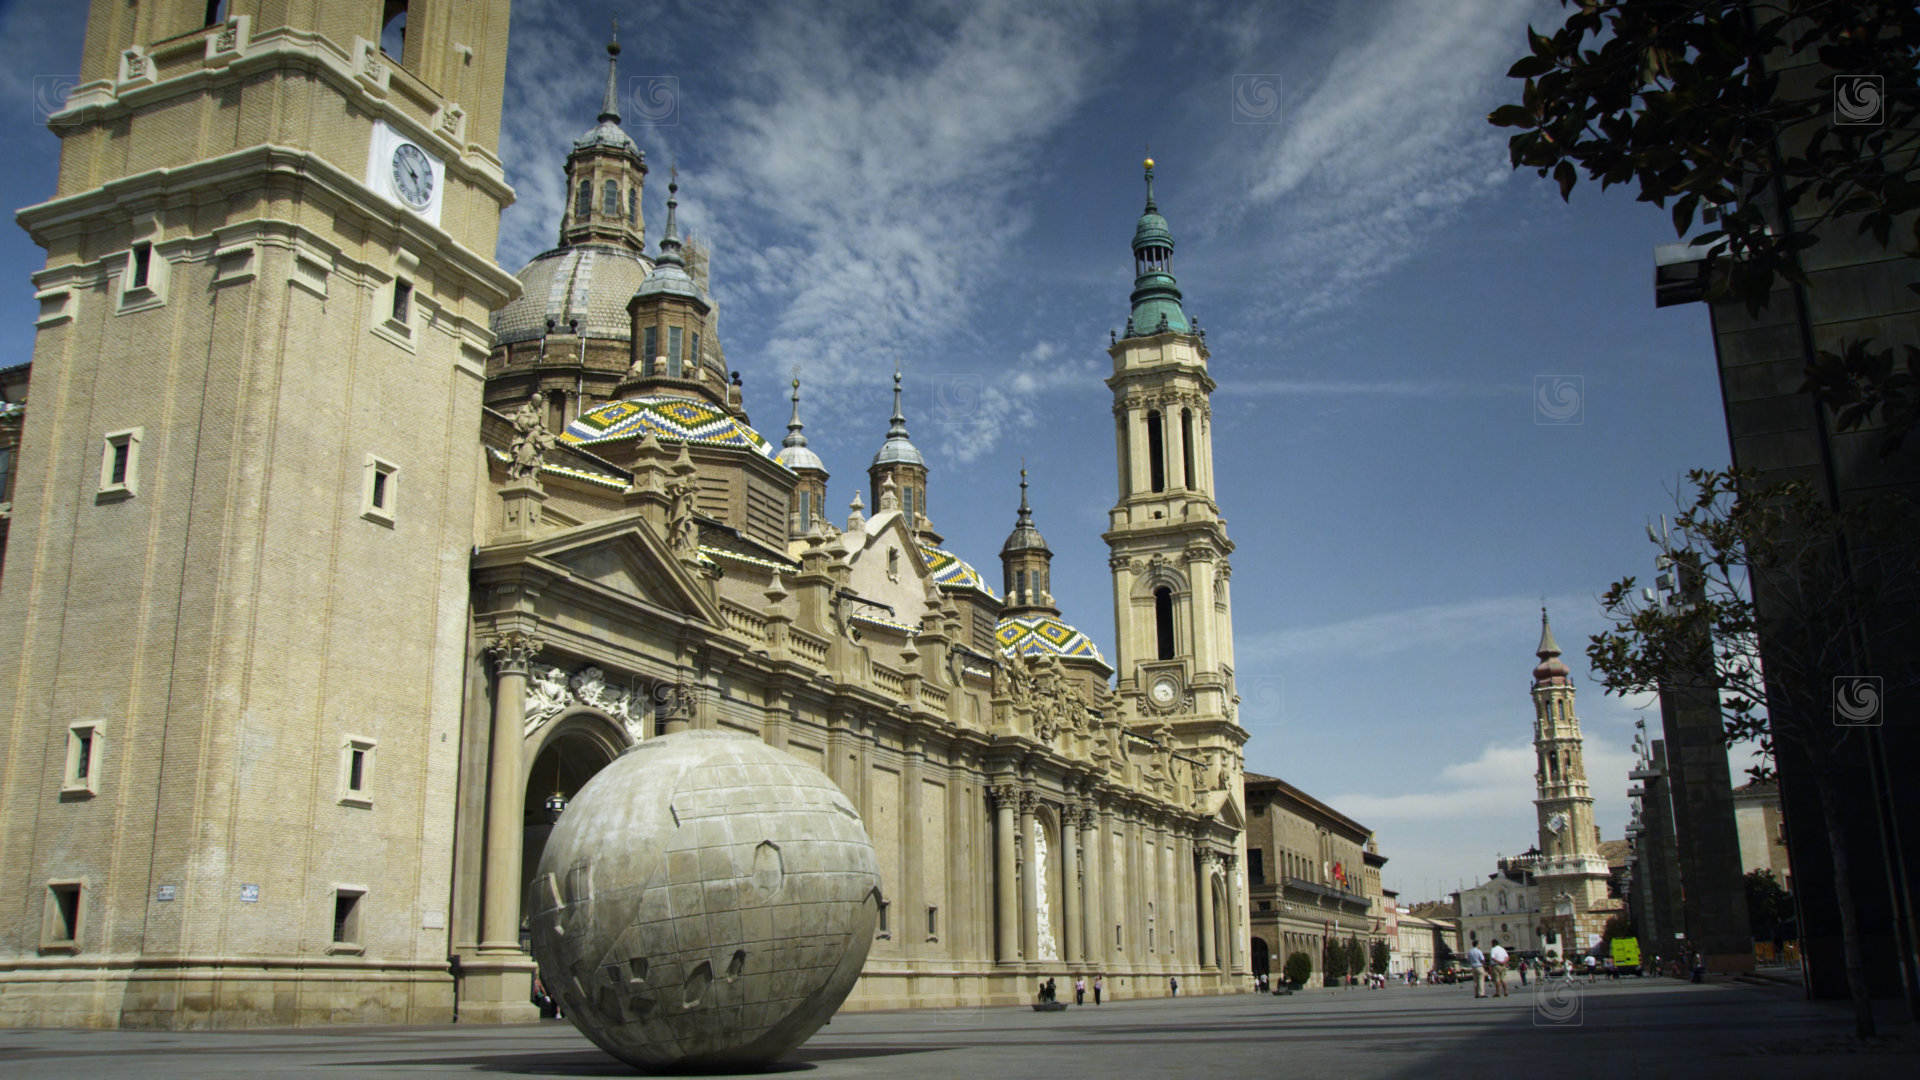 Fotograma de vídeo promocional de Zaragoza, mostrando la Plaza de El Pilar